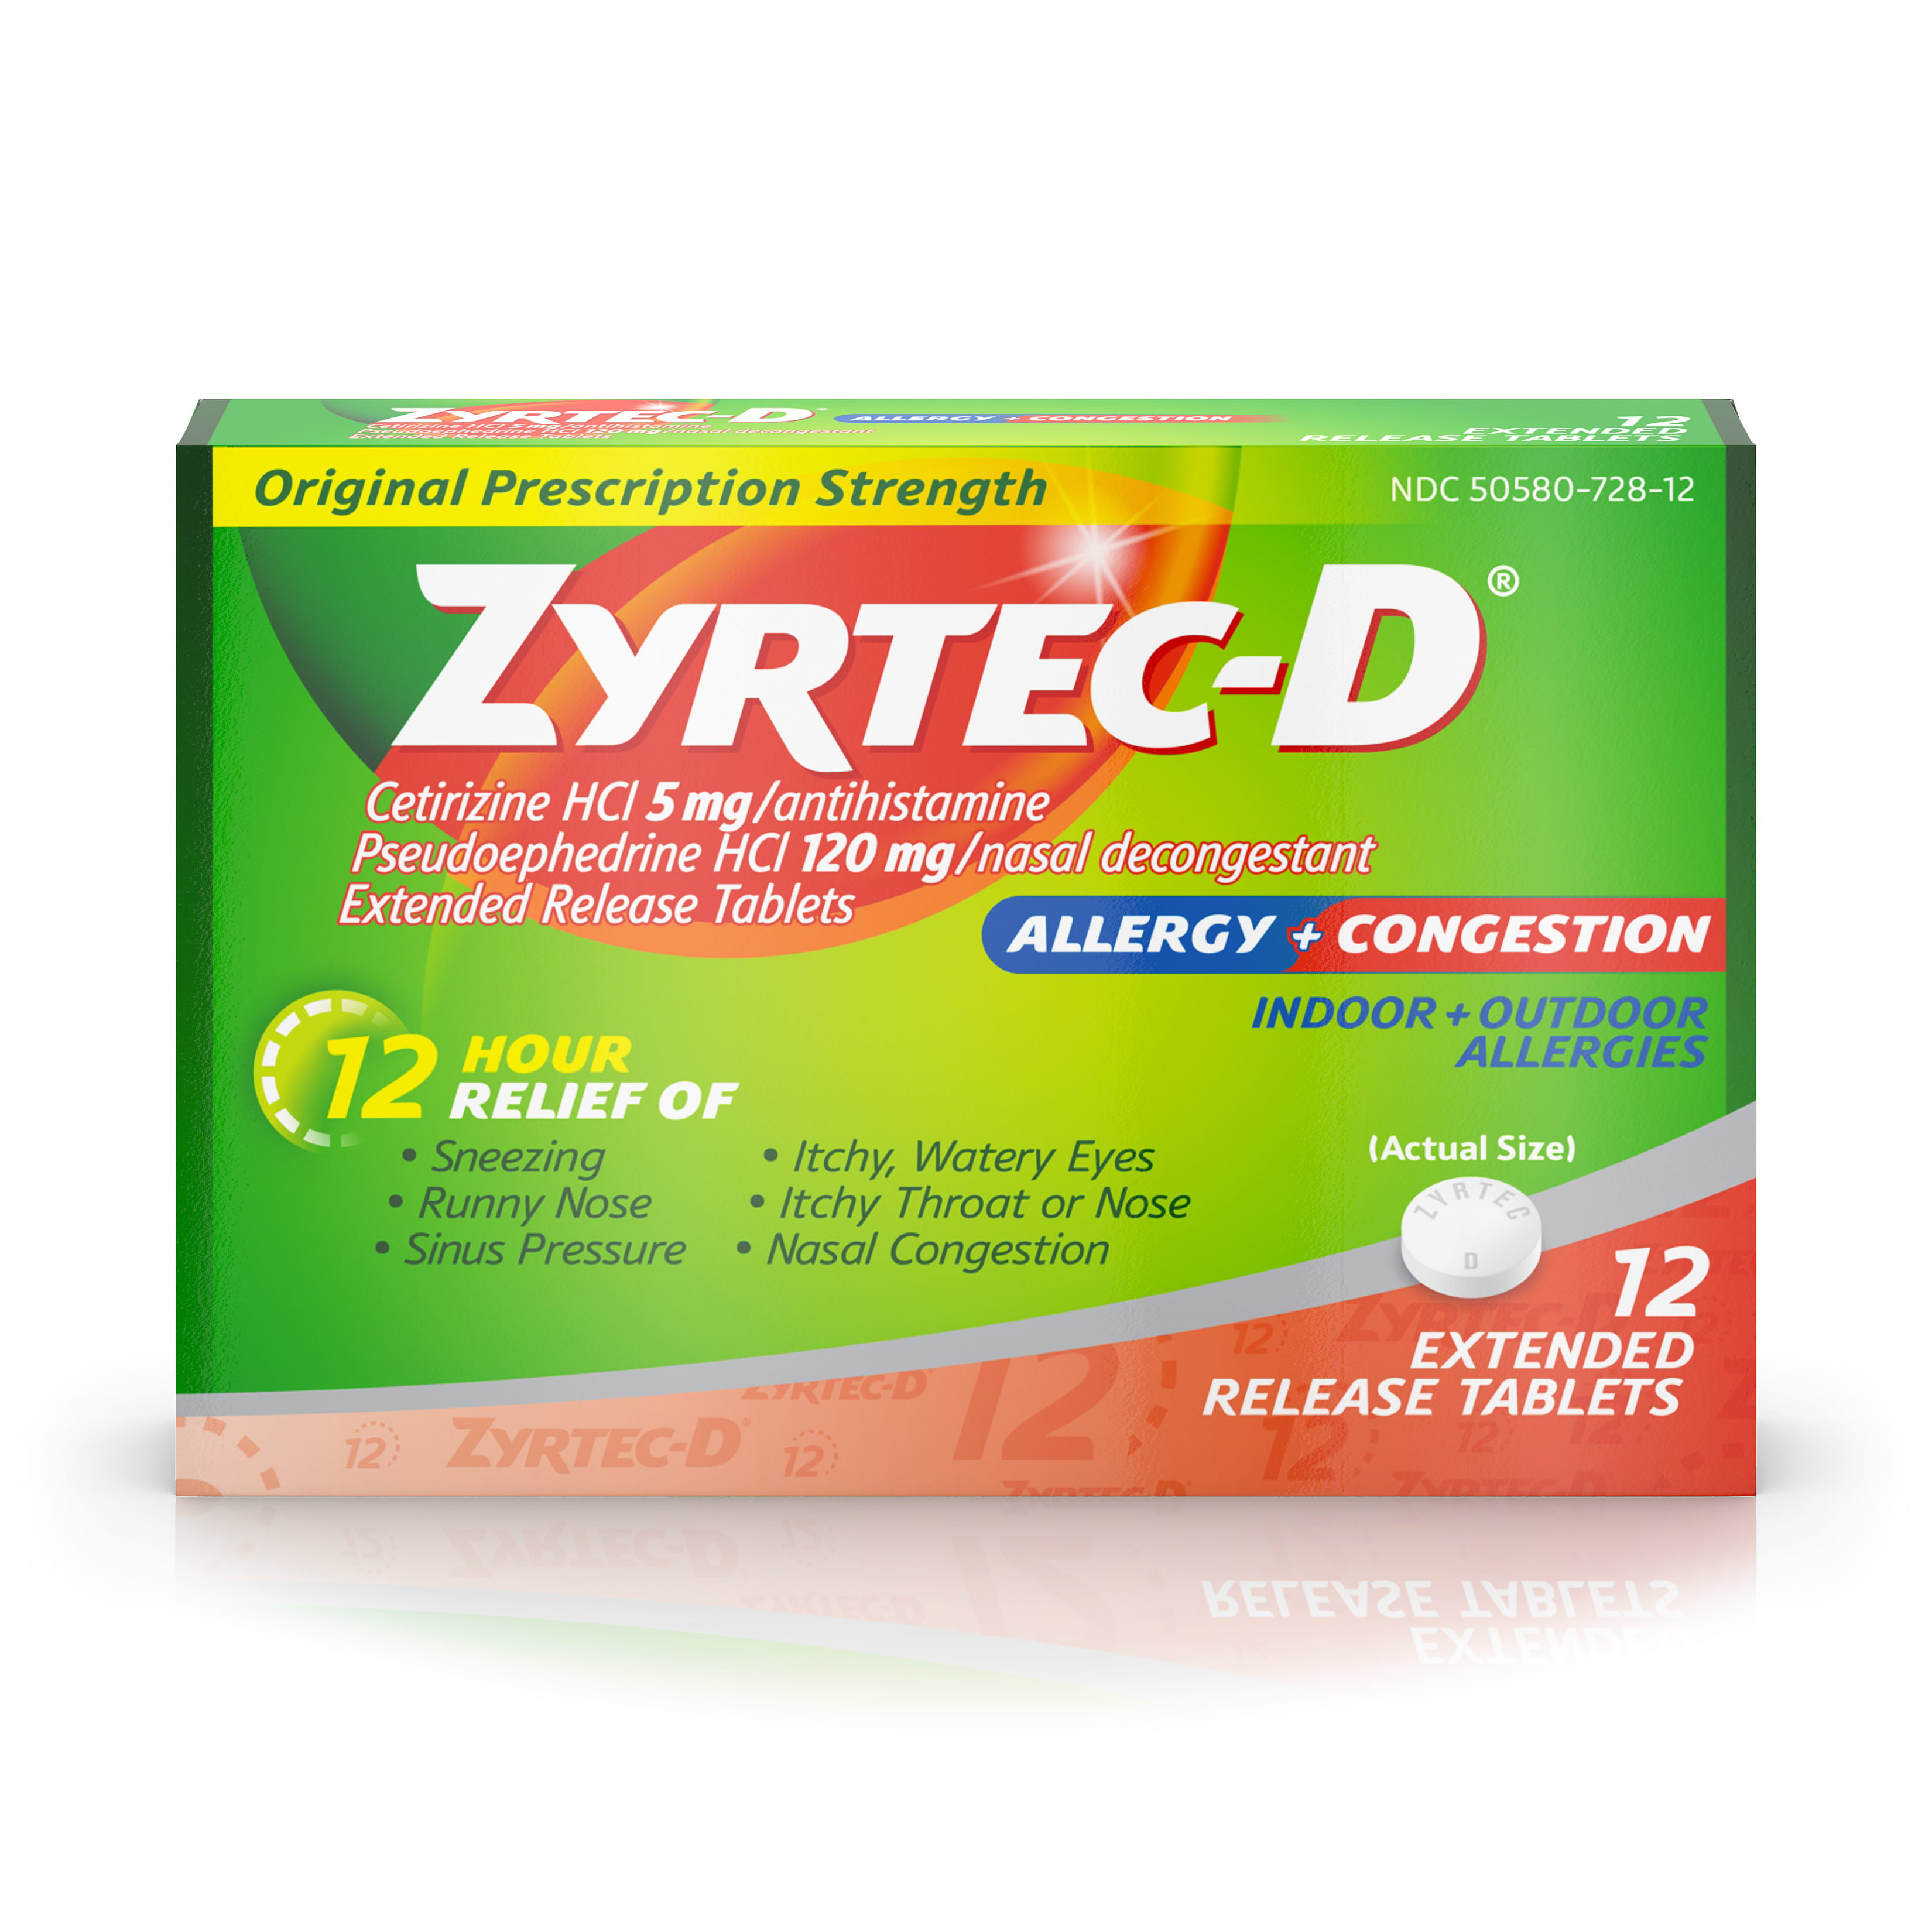 zyrtec-d-12-hour-allergy-medicine-nasal-decongestant-tablets-12-ct